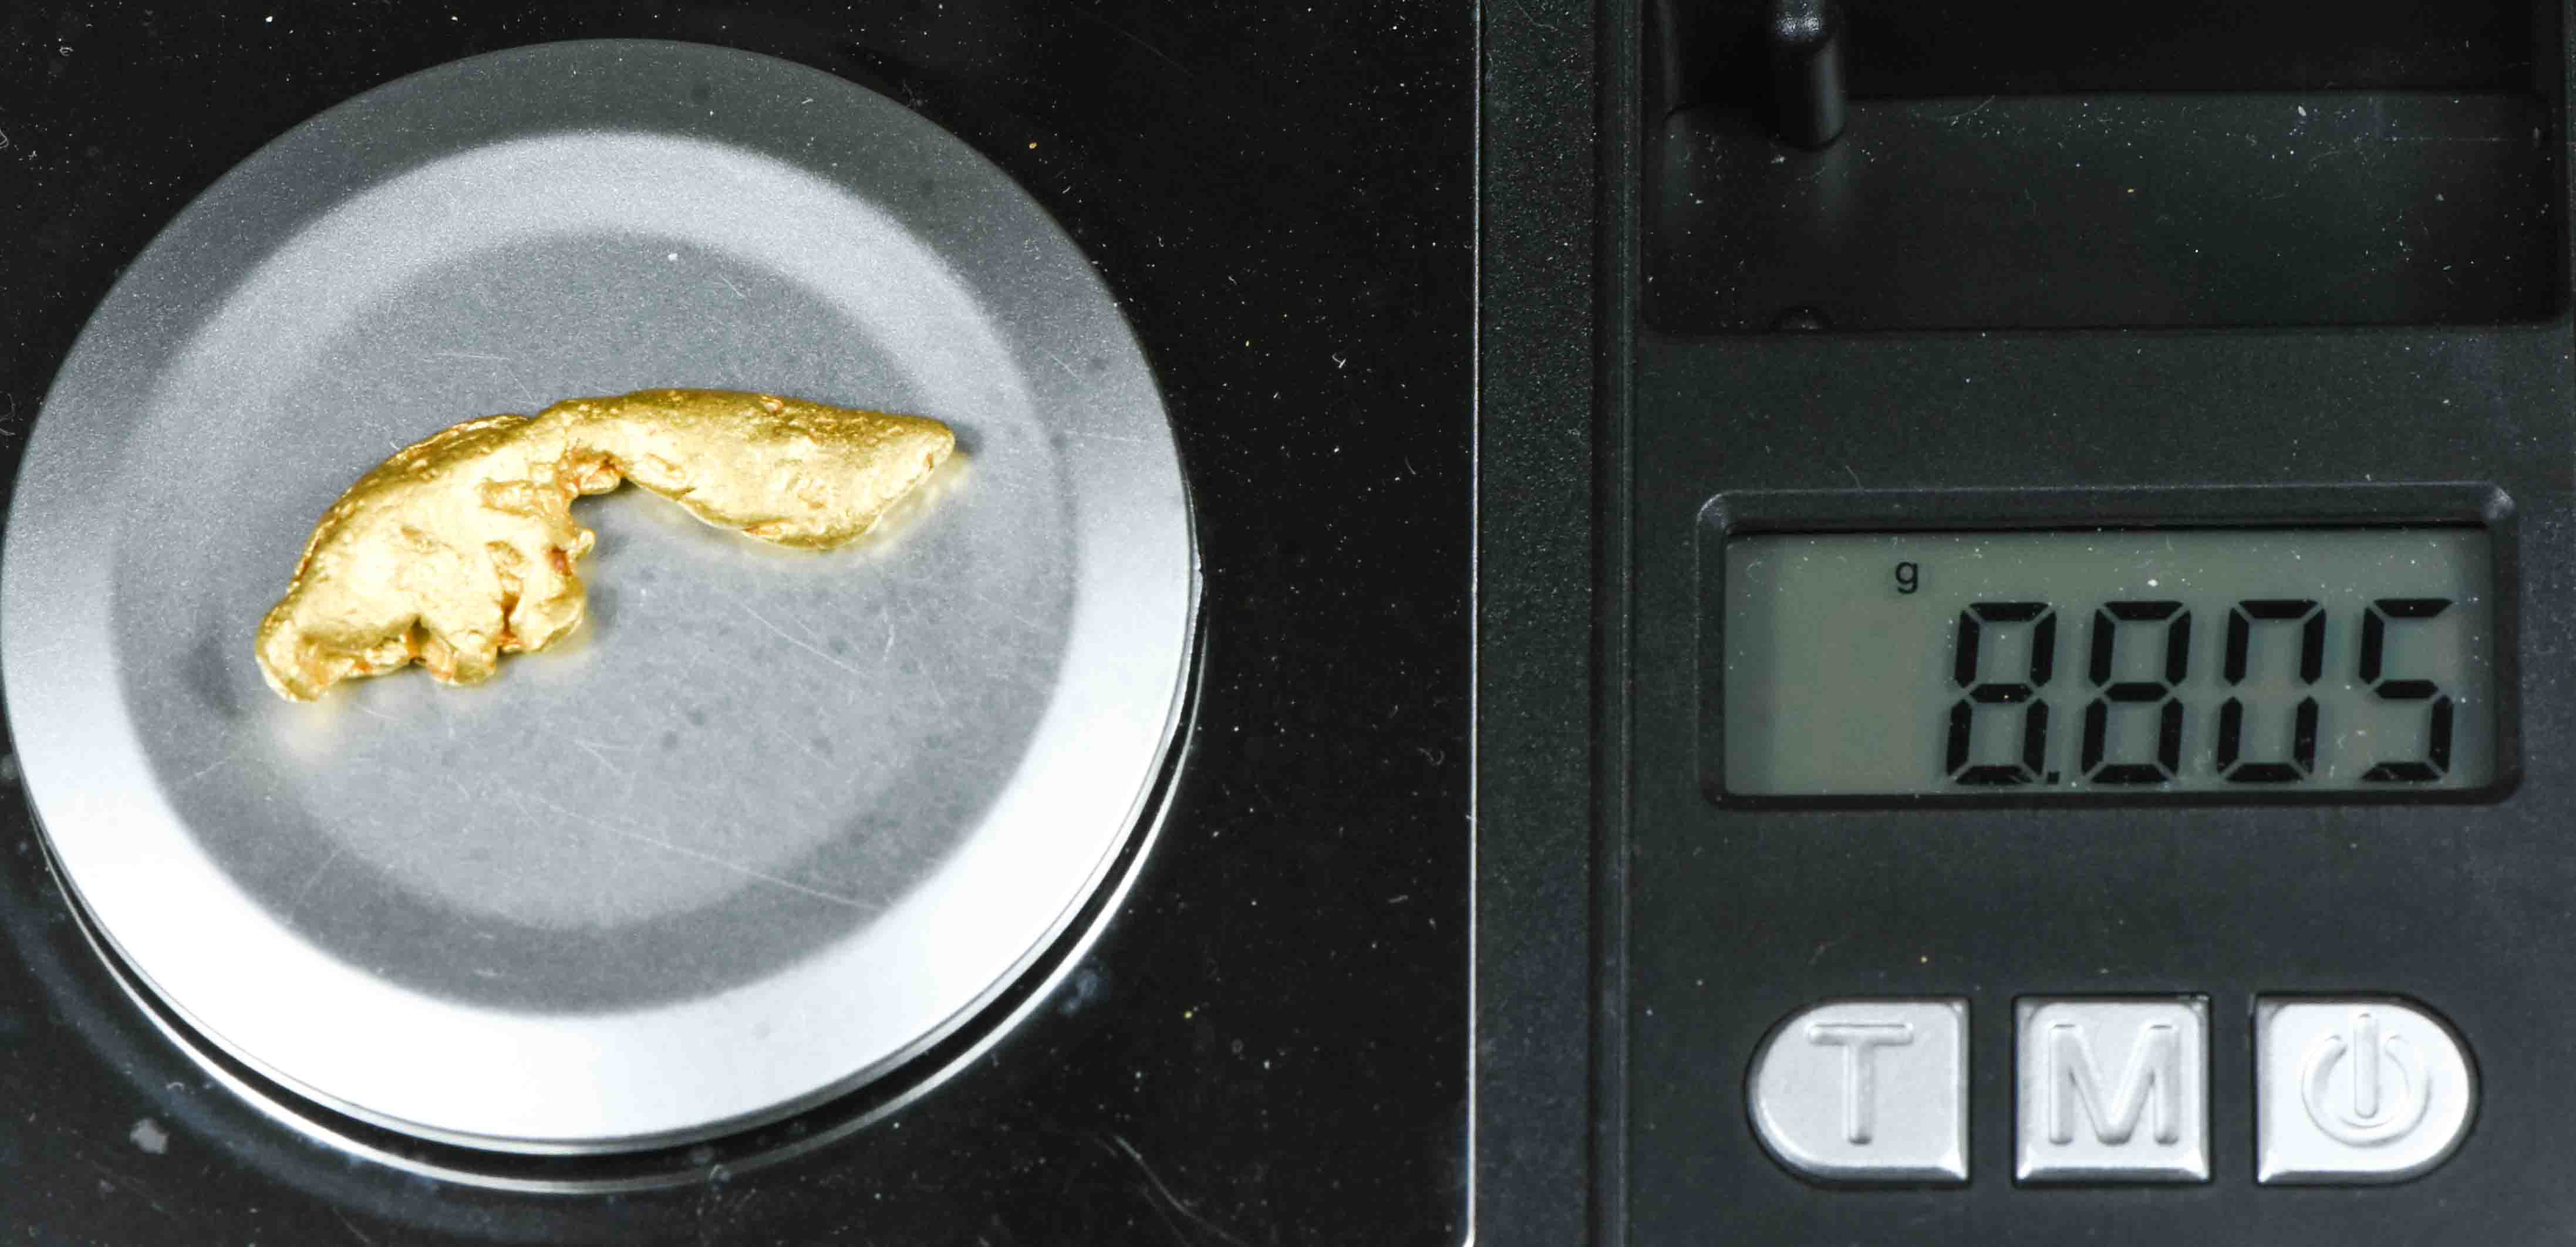 #1177 Natural Gold Nugget Australian 8.80 Grams Genuine